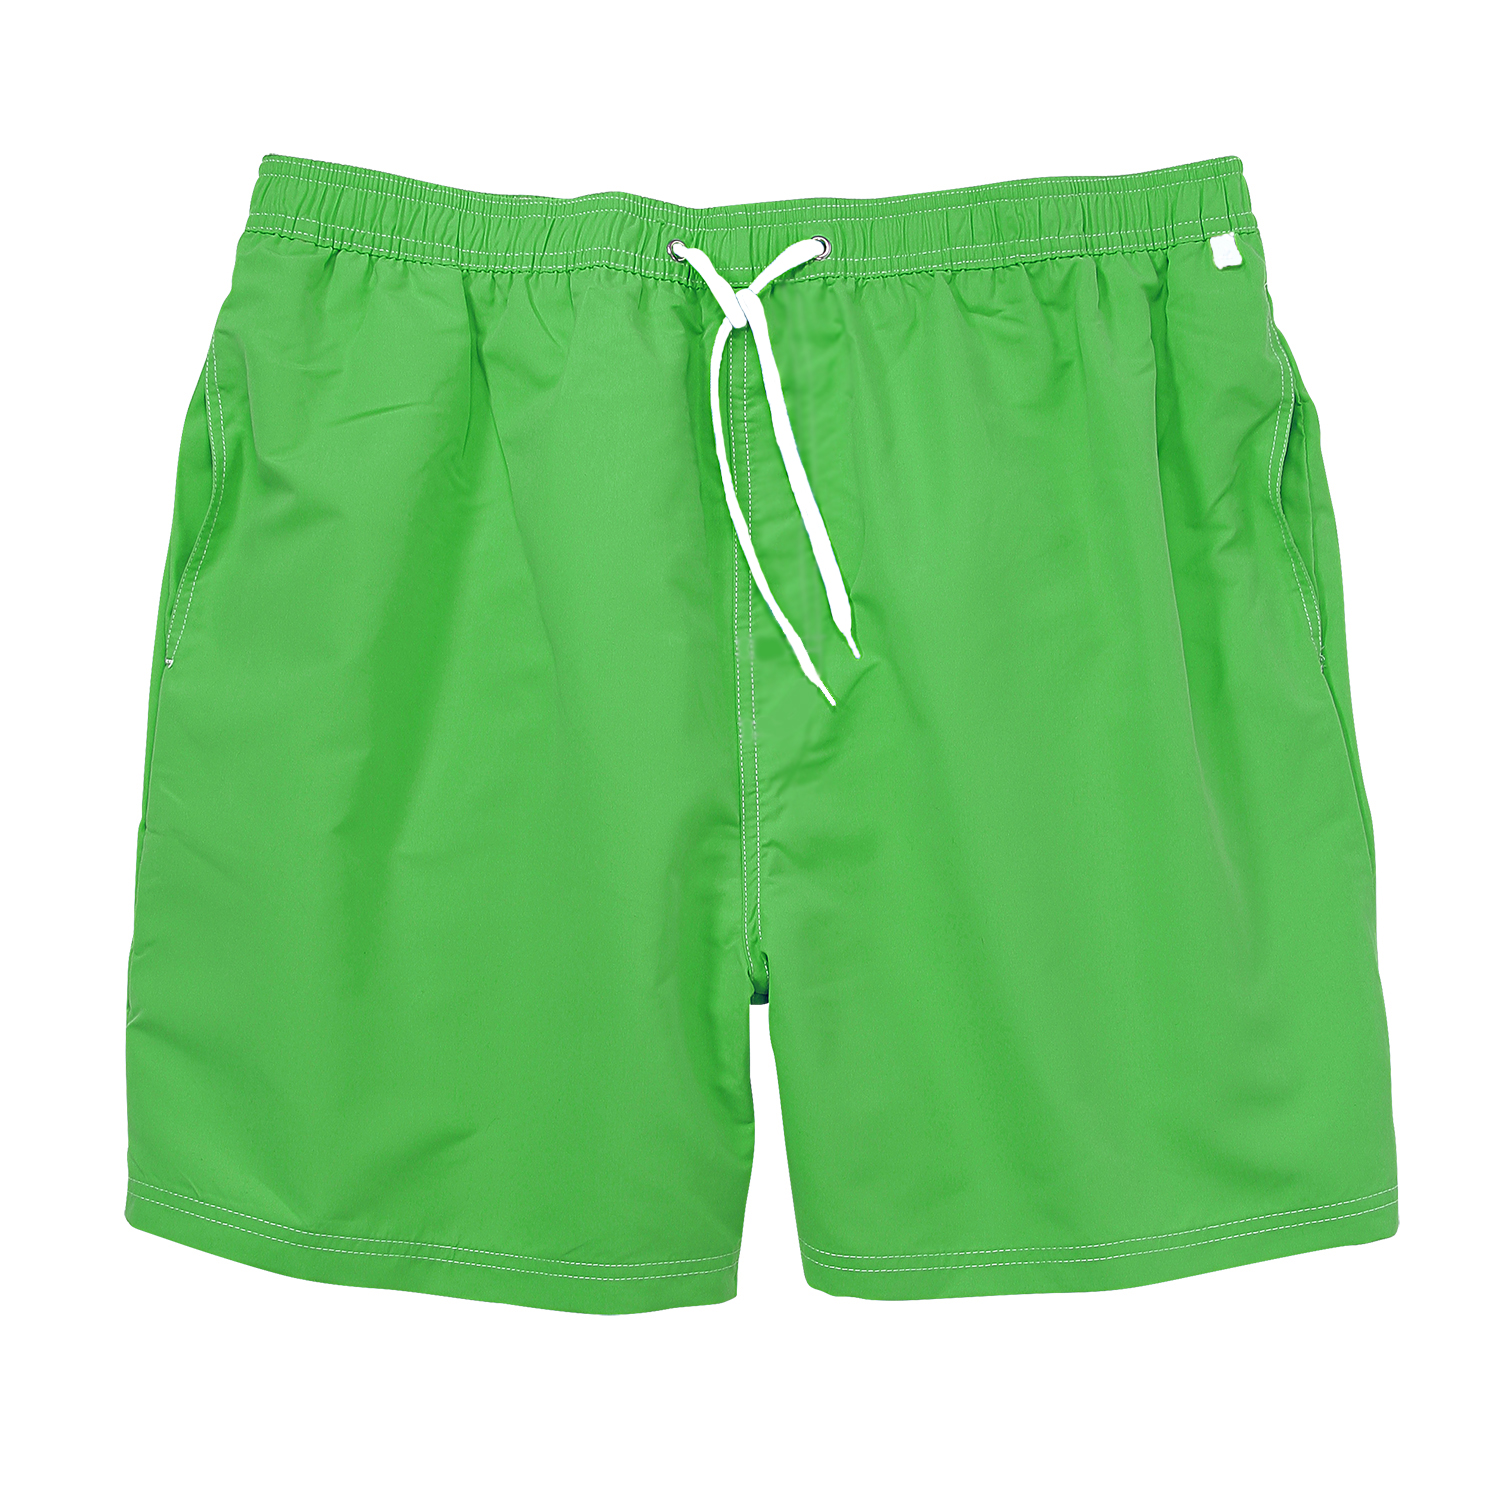 Swim bermudas in green by eleMar up to oversize 10XL